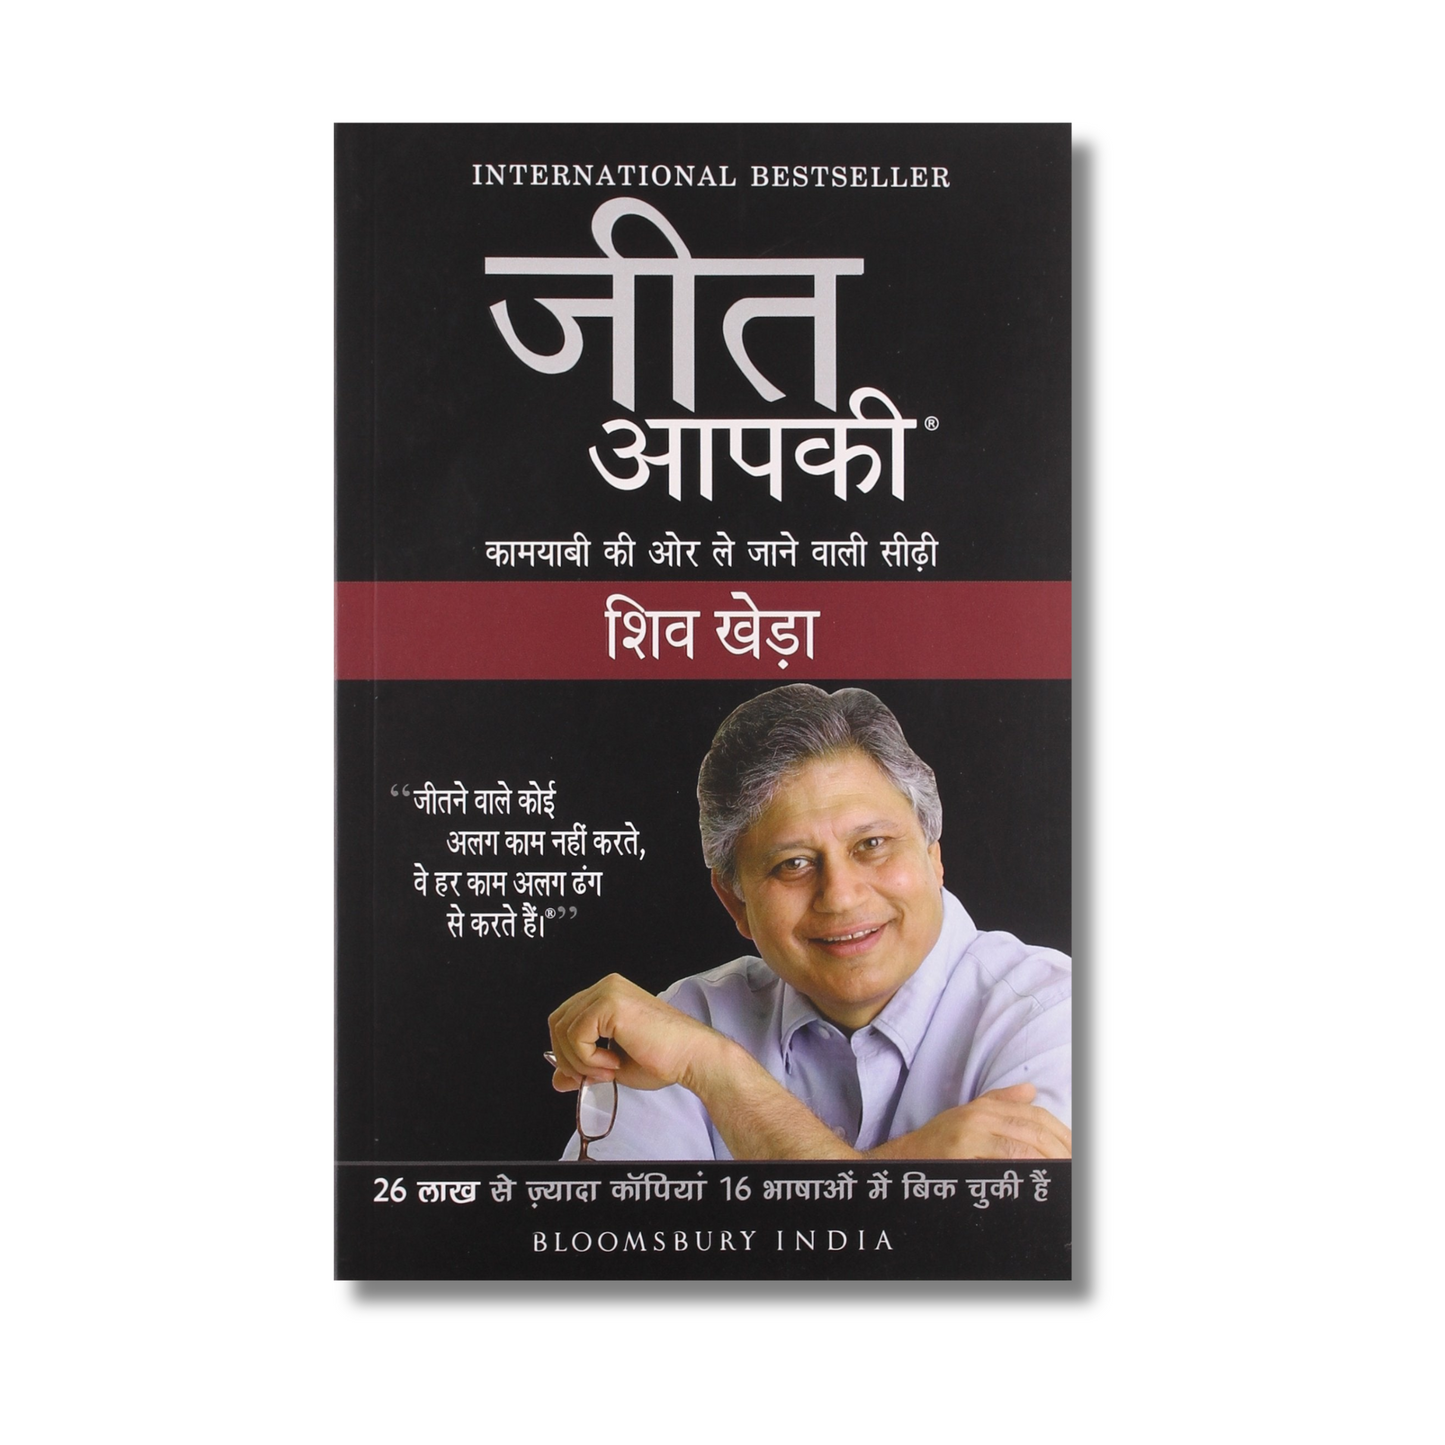 (Hindi) Jeet Aapki - You Can Win By Shiv Khera (Paperback)